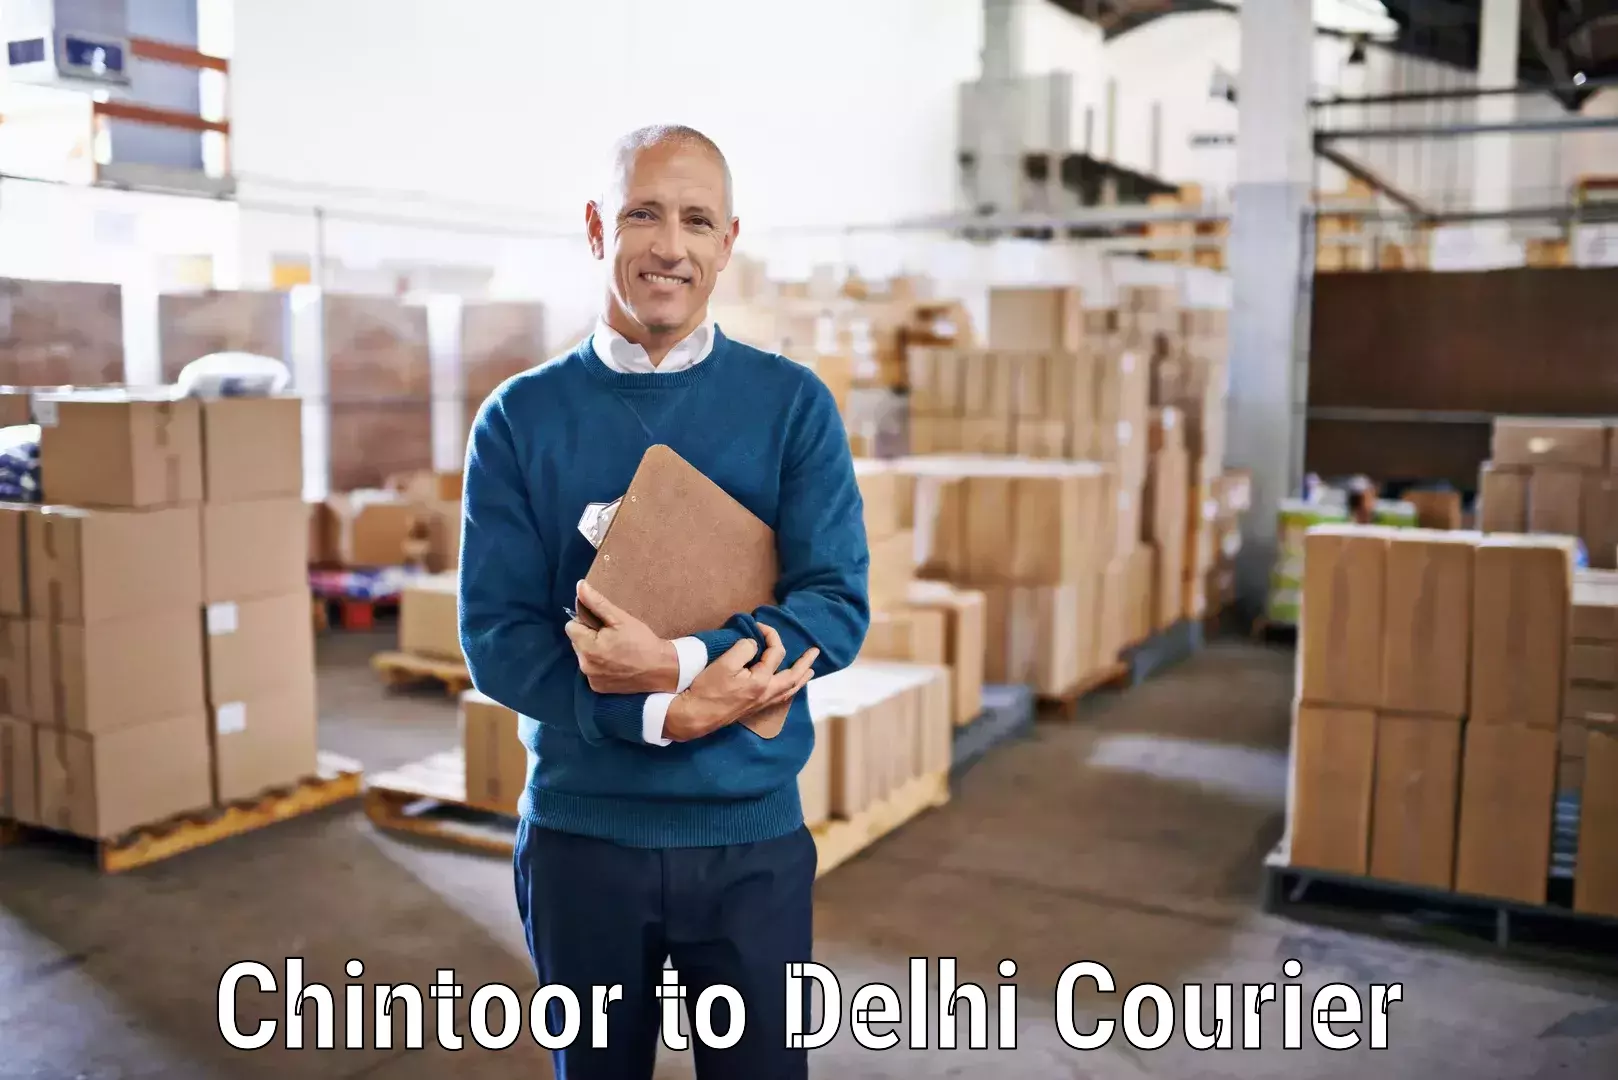 Affordable parcel service Chintoor to East Delhi